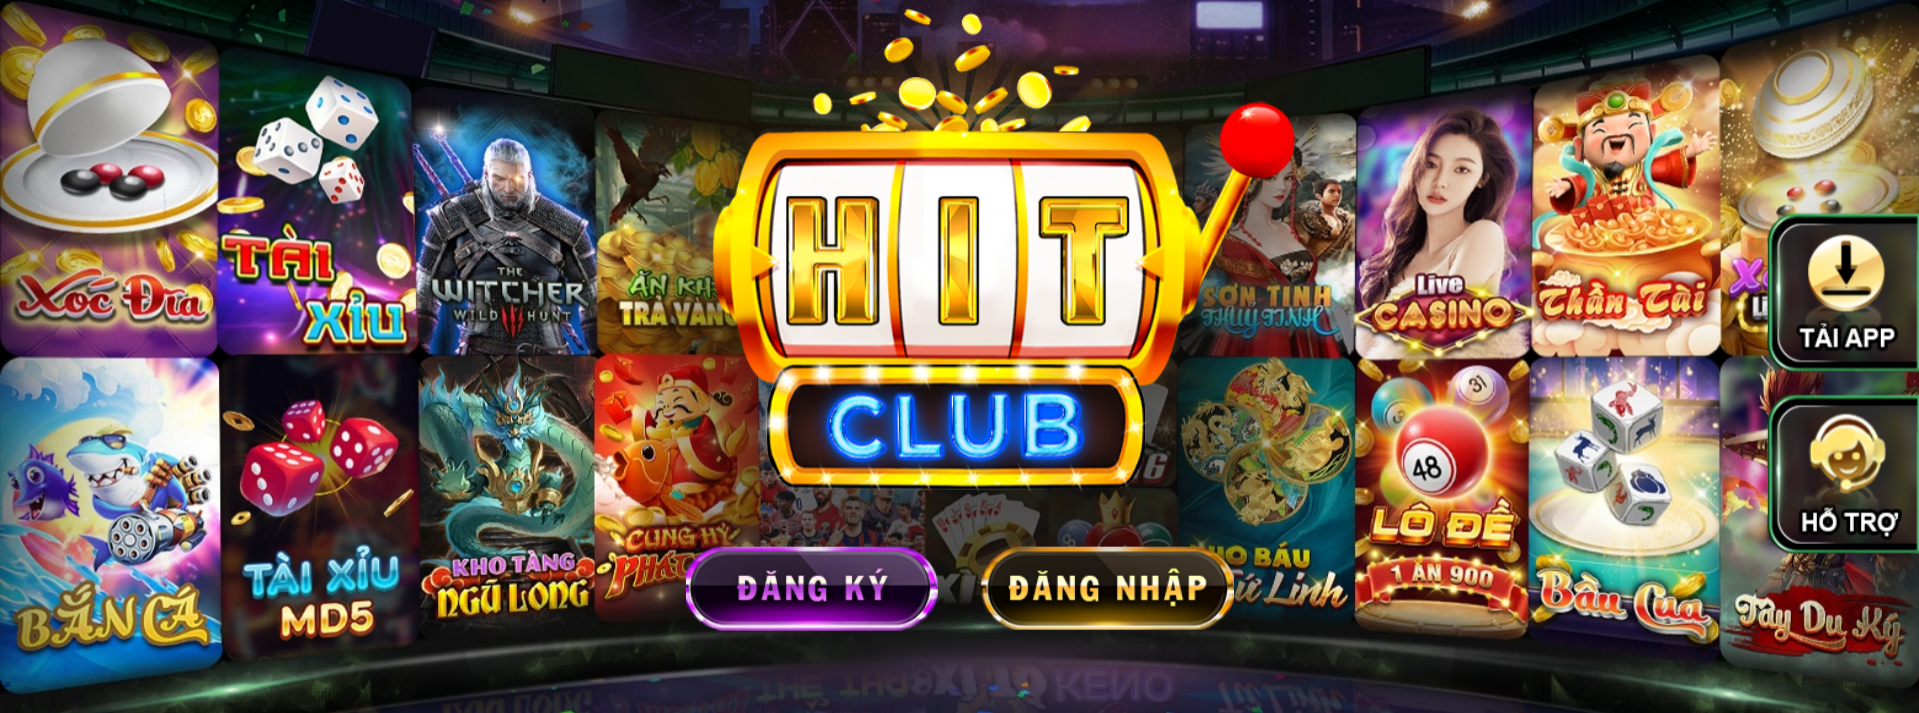 hit-club